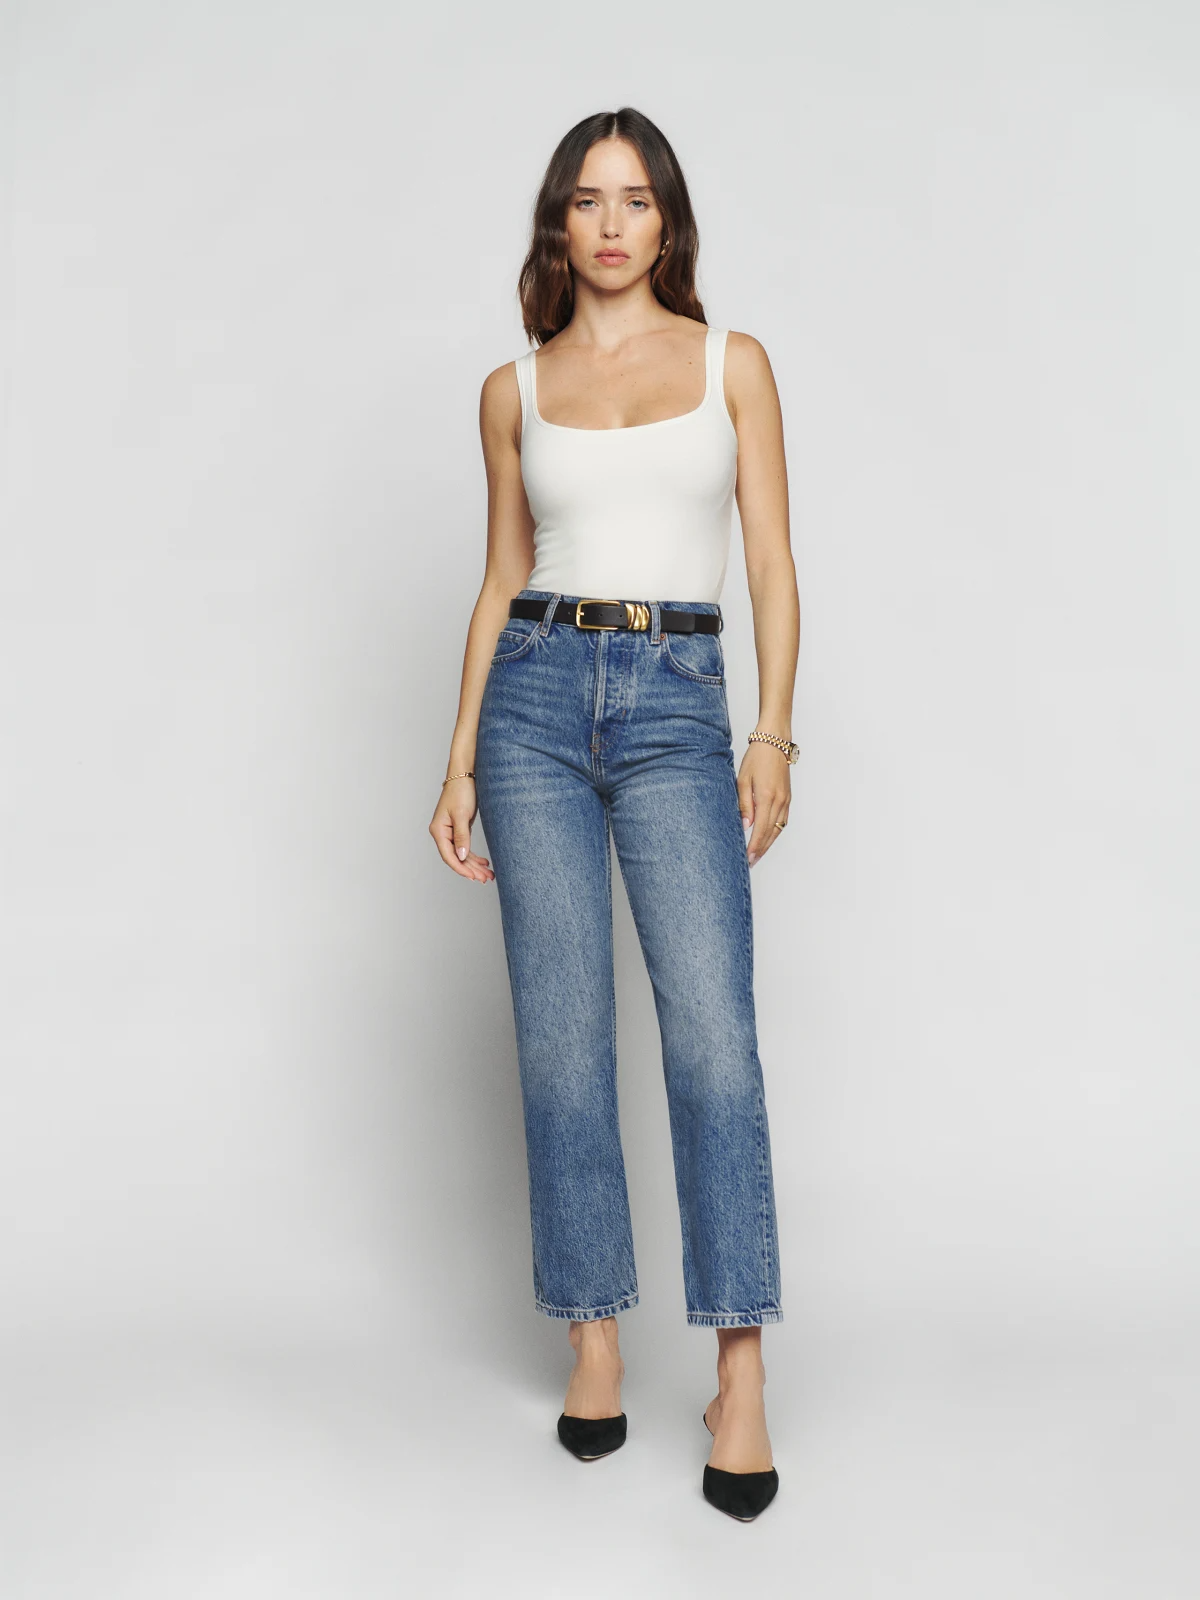 15 Best Denim Jeans For Petite Women With Short Inseams